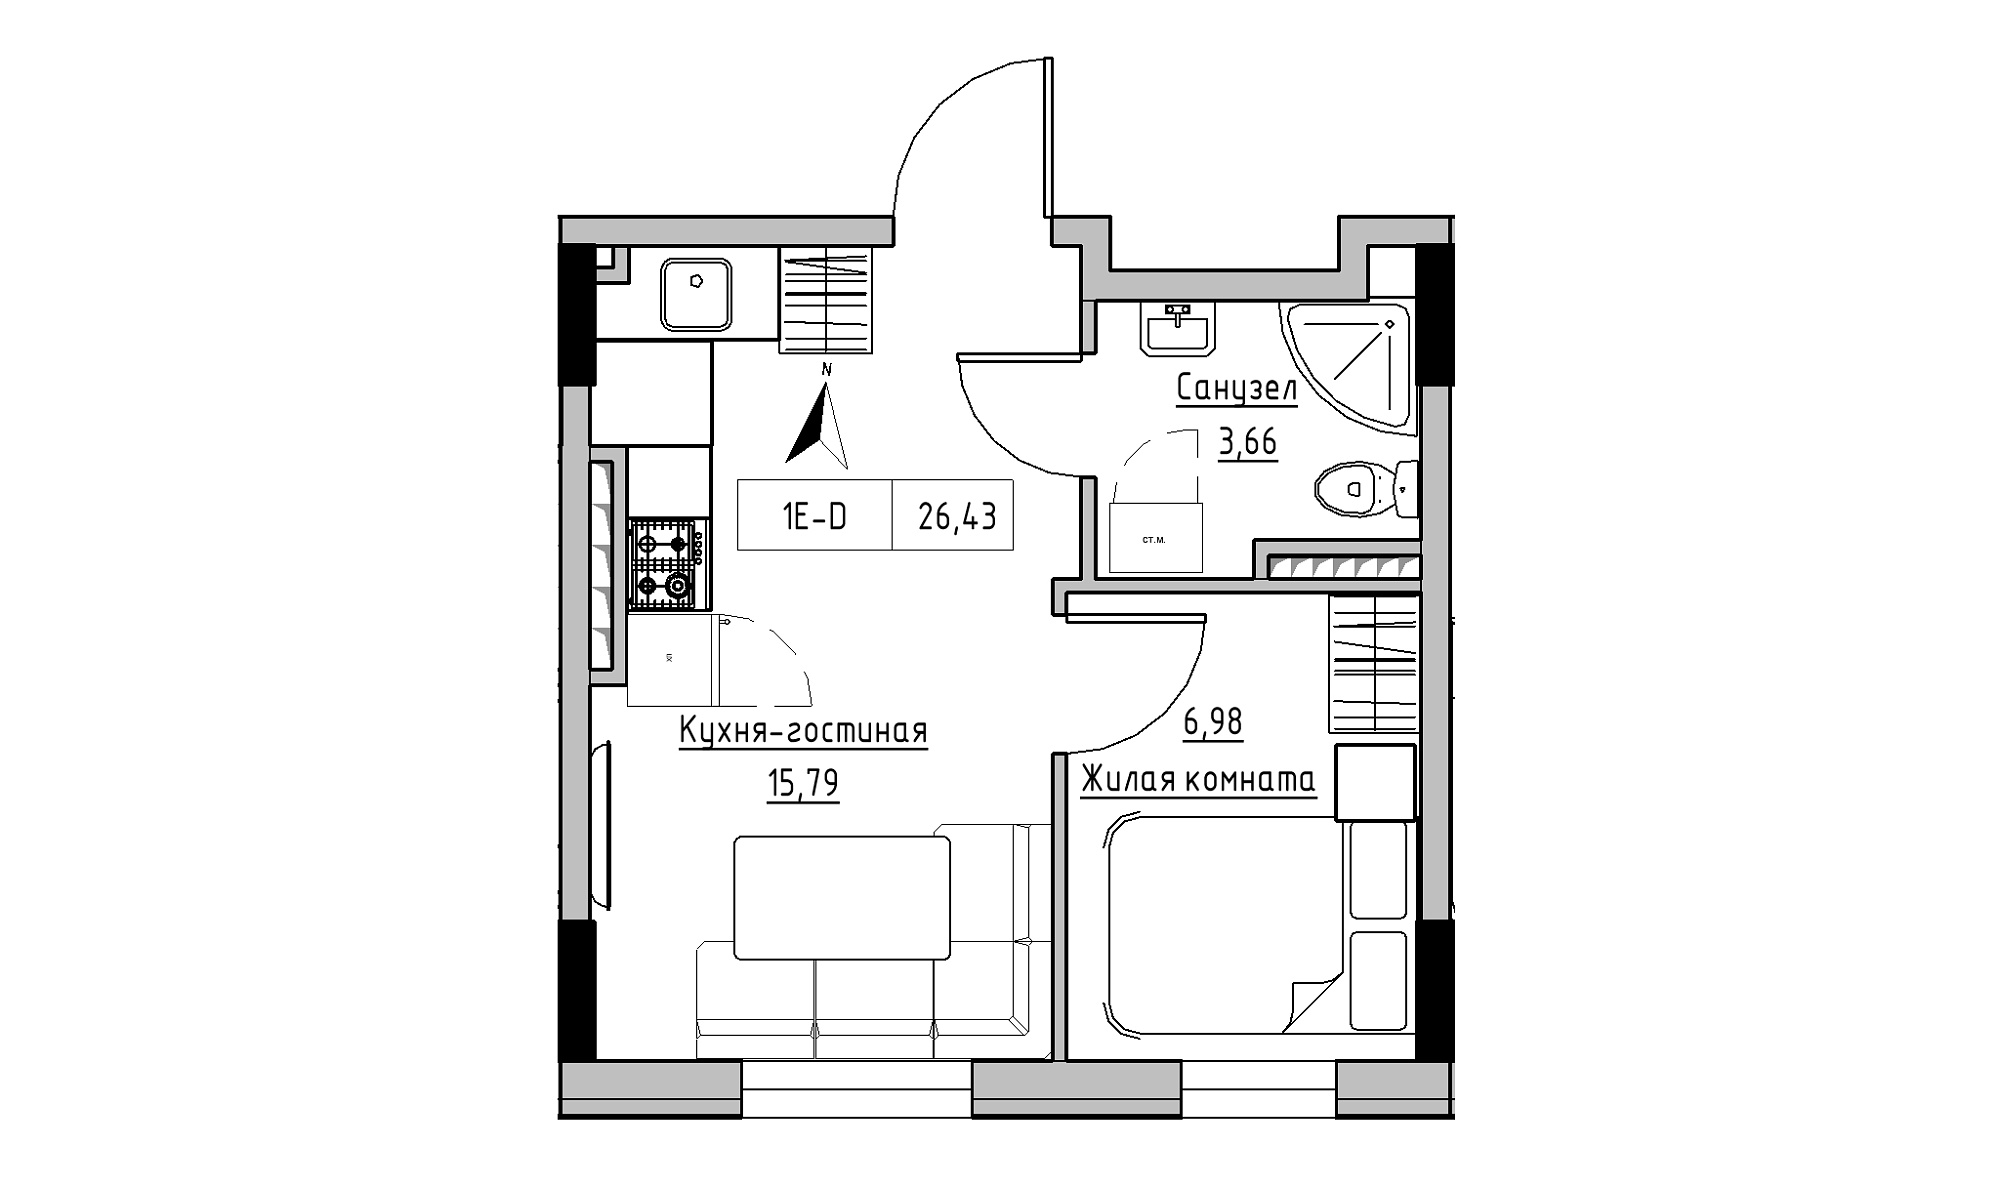 Planning 1-rm flats area 26.43m2, KS-025-05/0013.